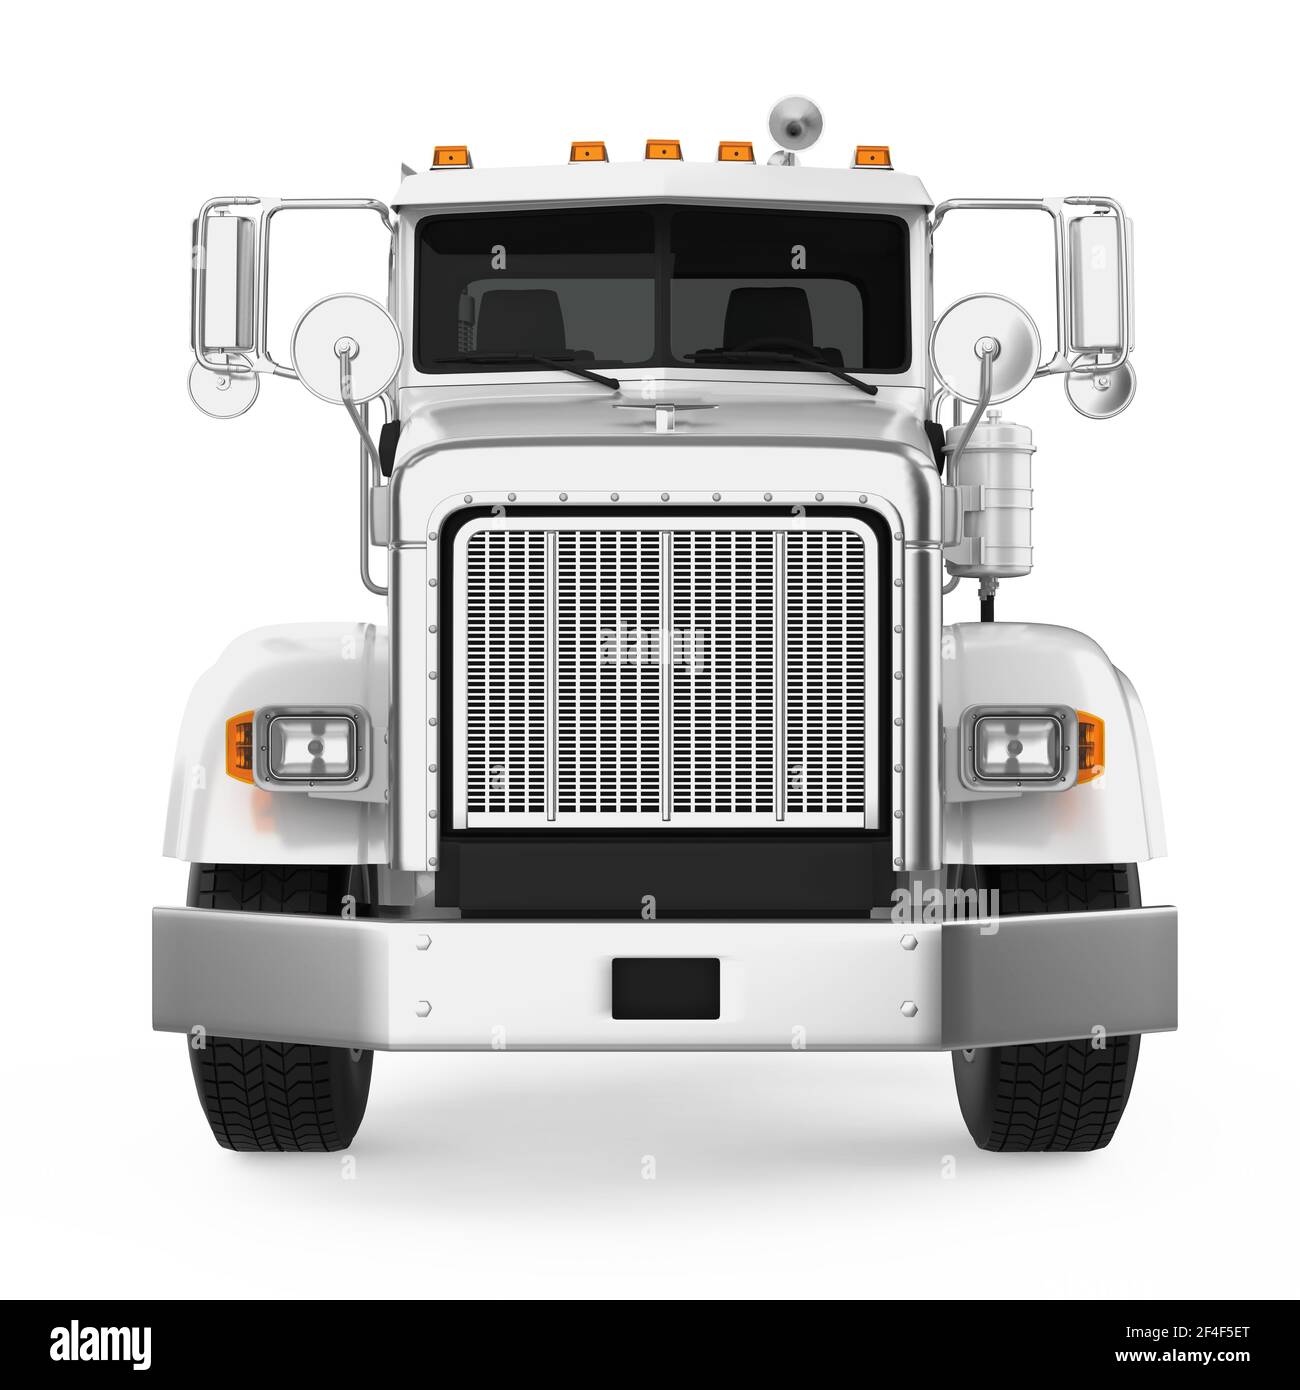 Semi trailer truck -Fotos und -Bildmaterial in hoher Auflösung – Alamy